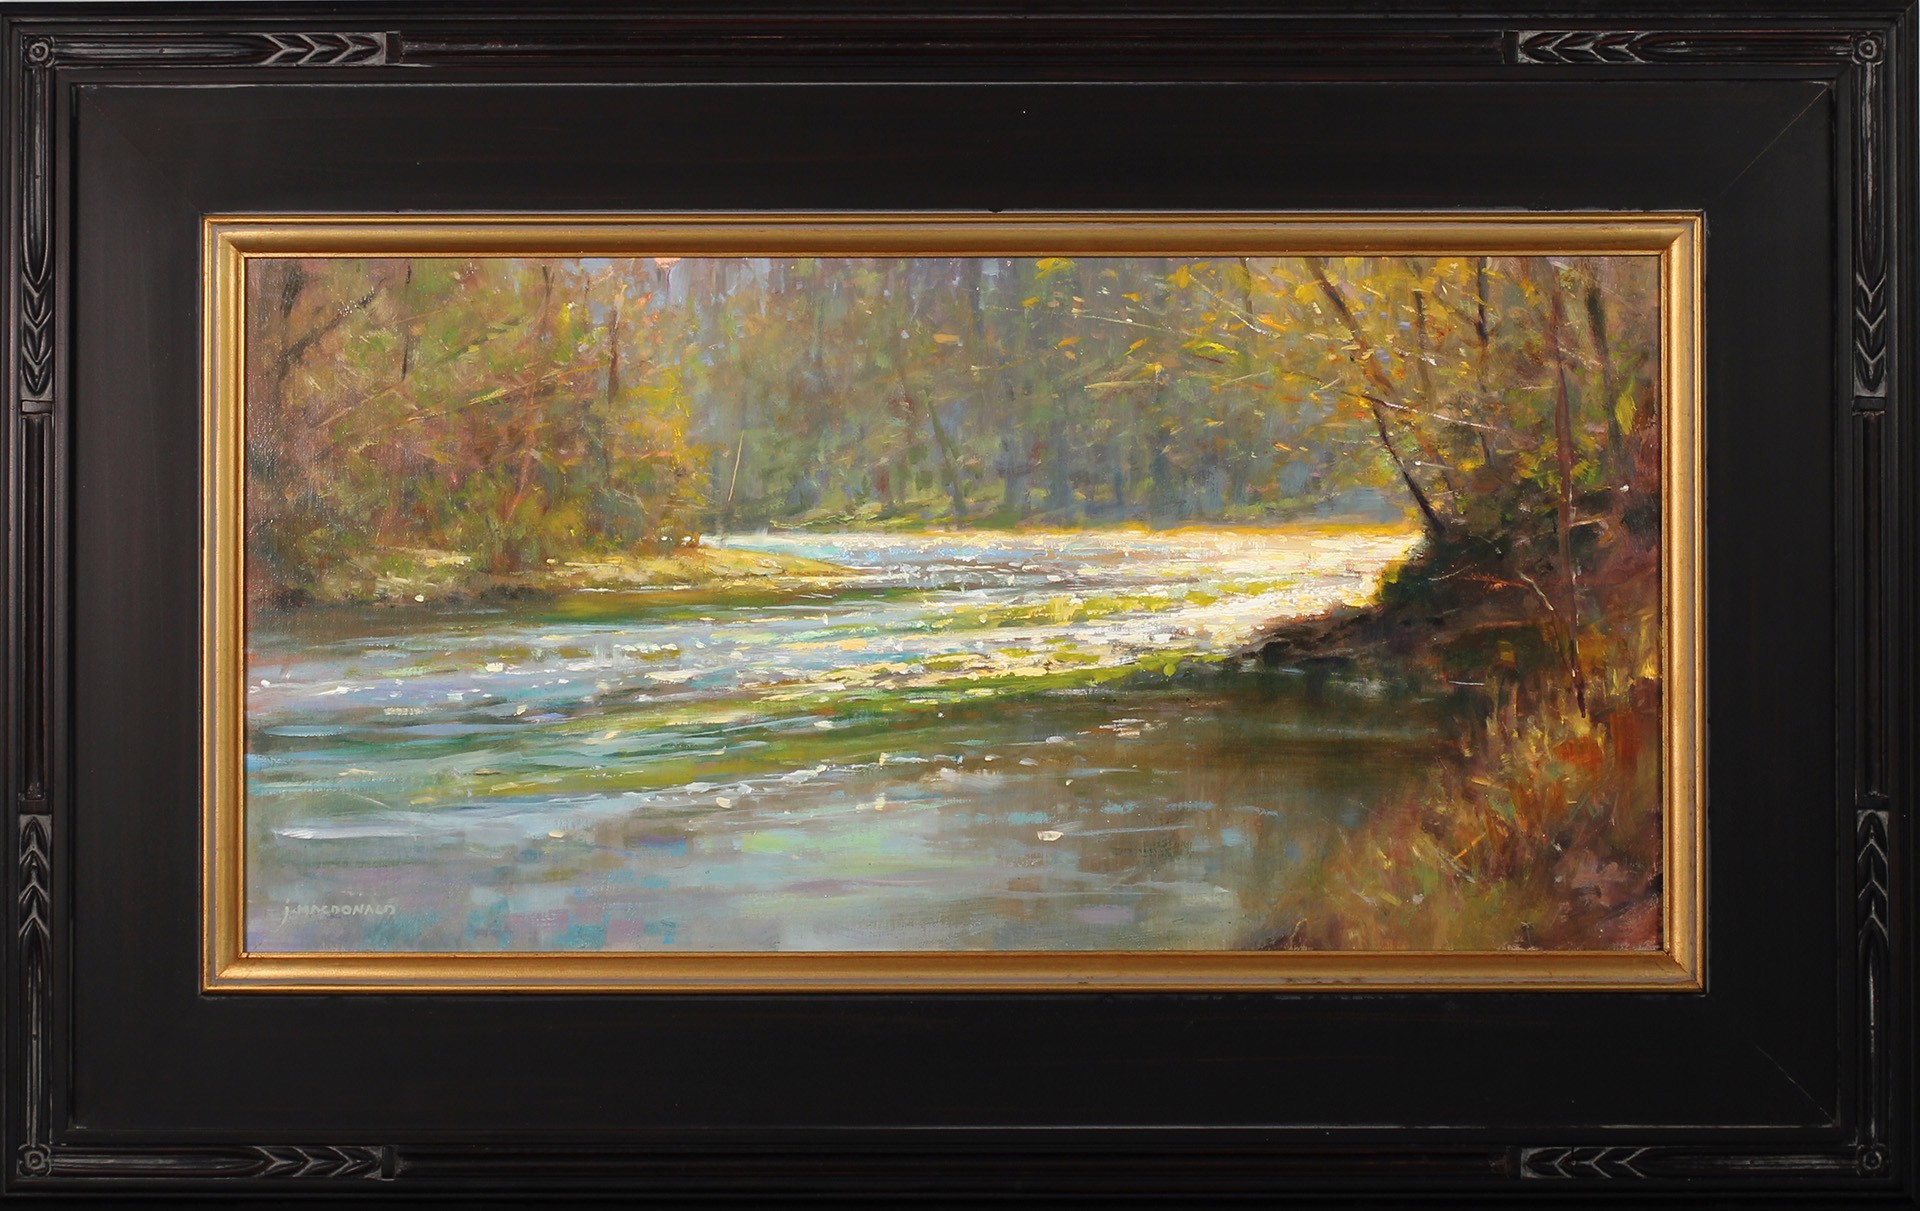 River Glare by John MacDonald